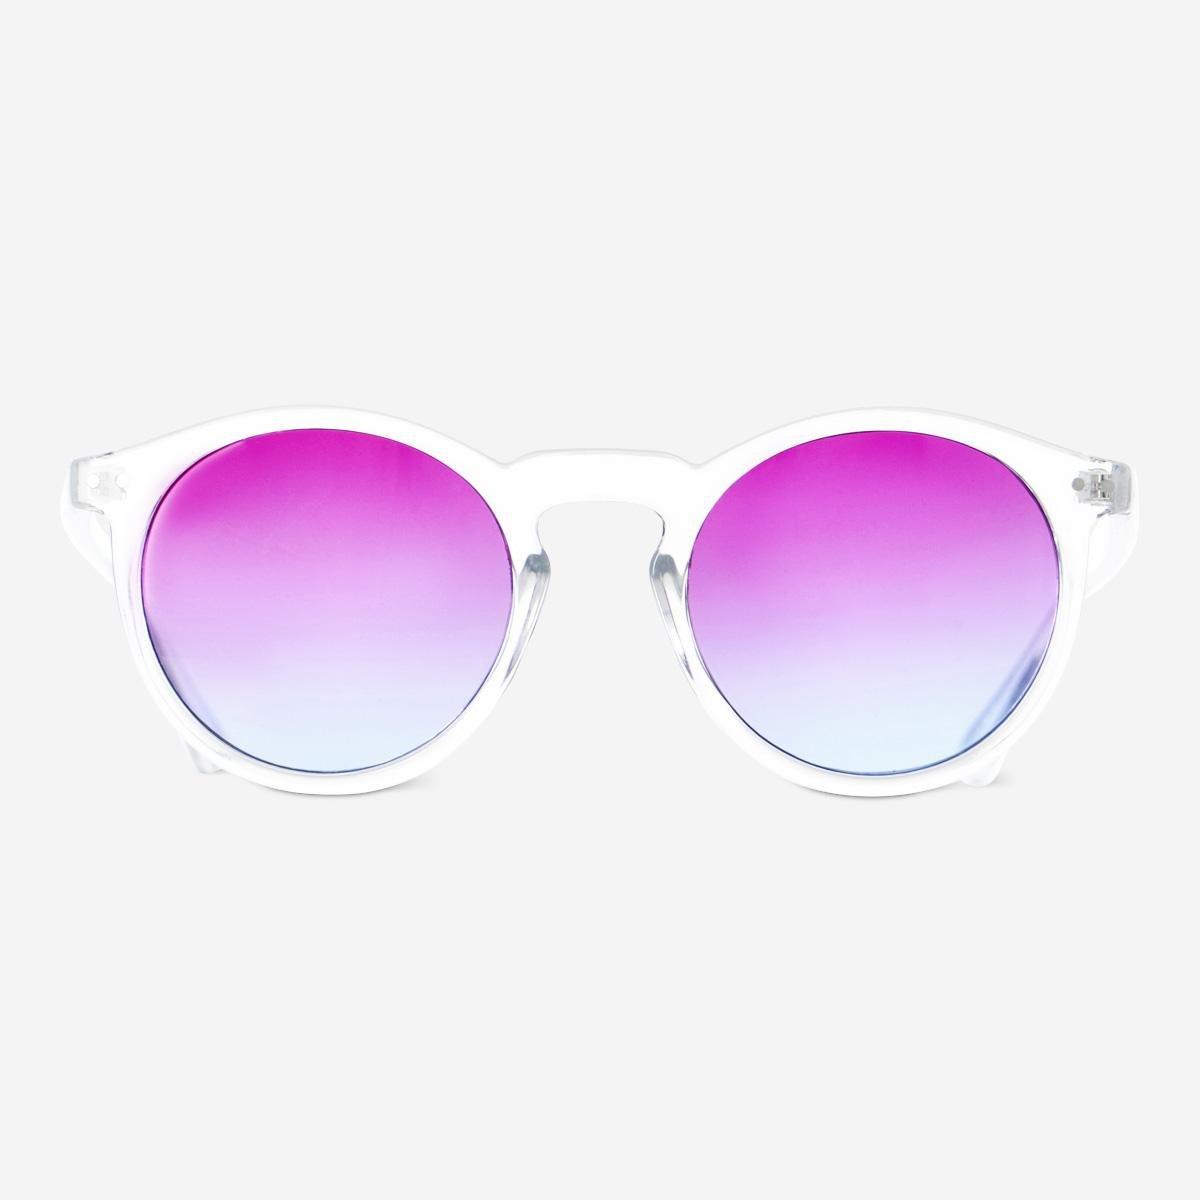 Multicolour round sunglasses